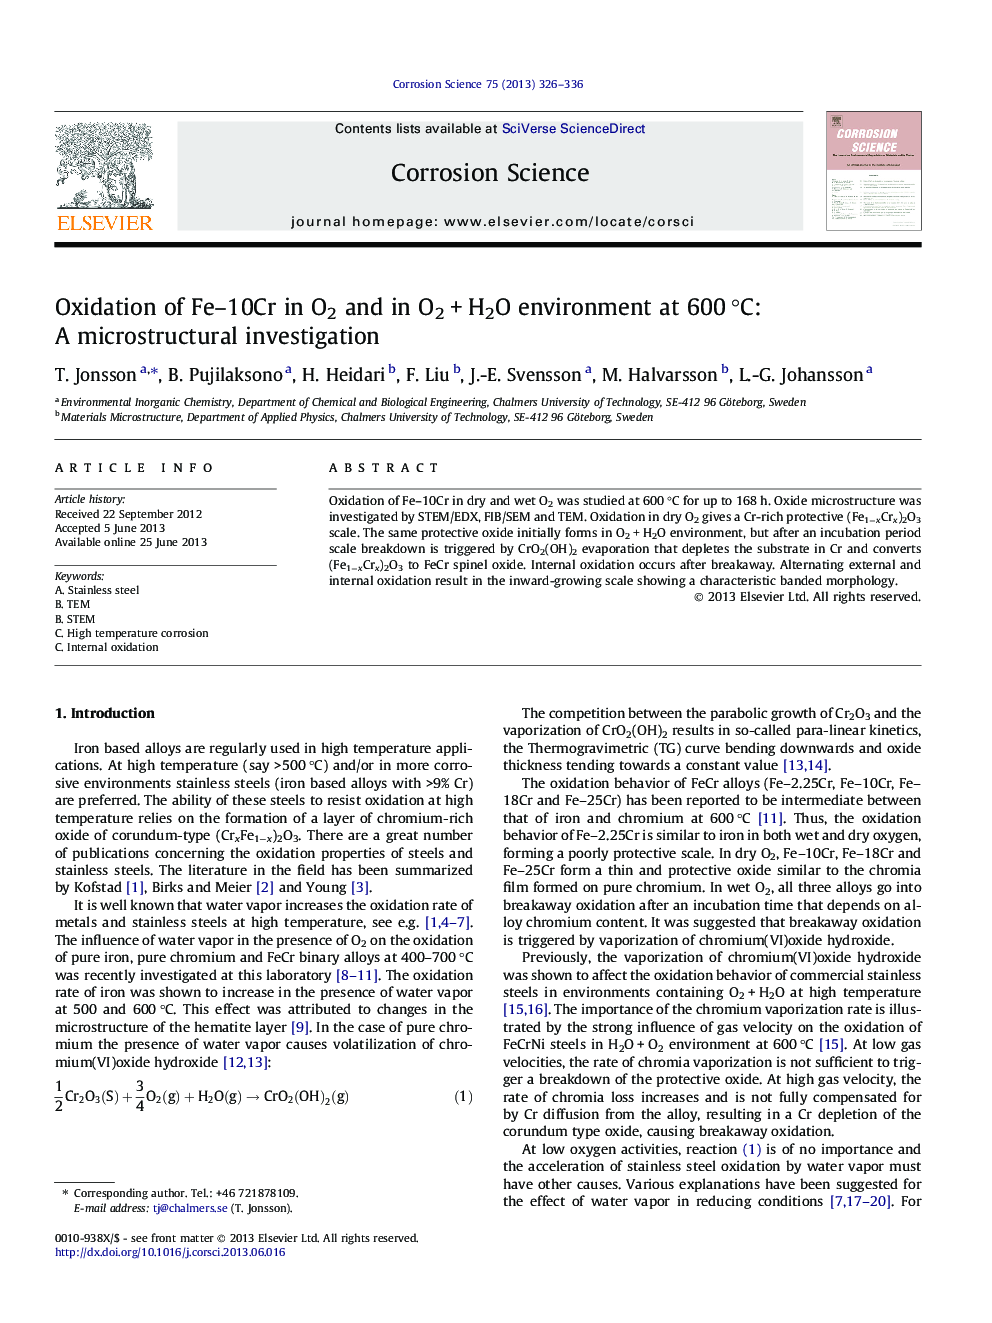 Oxidation of Fe-10Cr in O2 and in O2Â +Â H2O environment at 600Â Â°C: A microstructural investigation